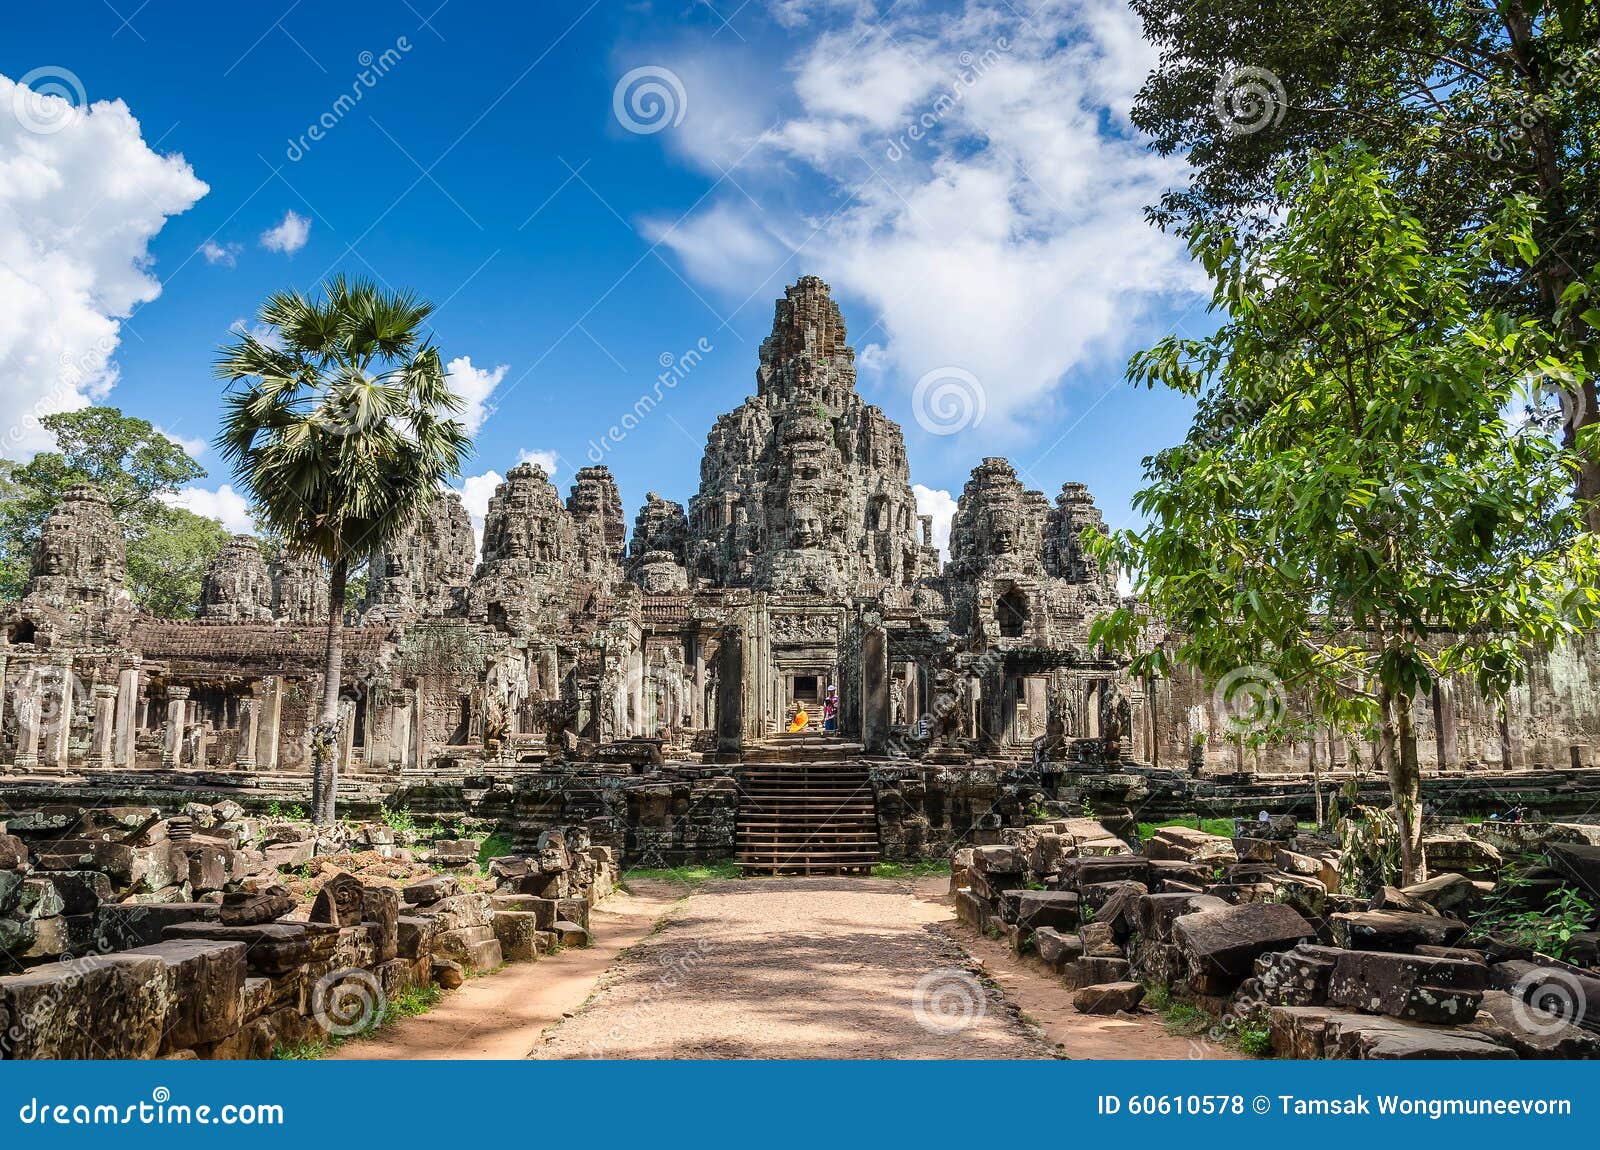 bayon temple in angkor thom